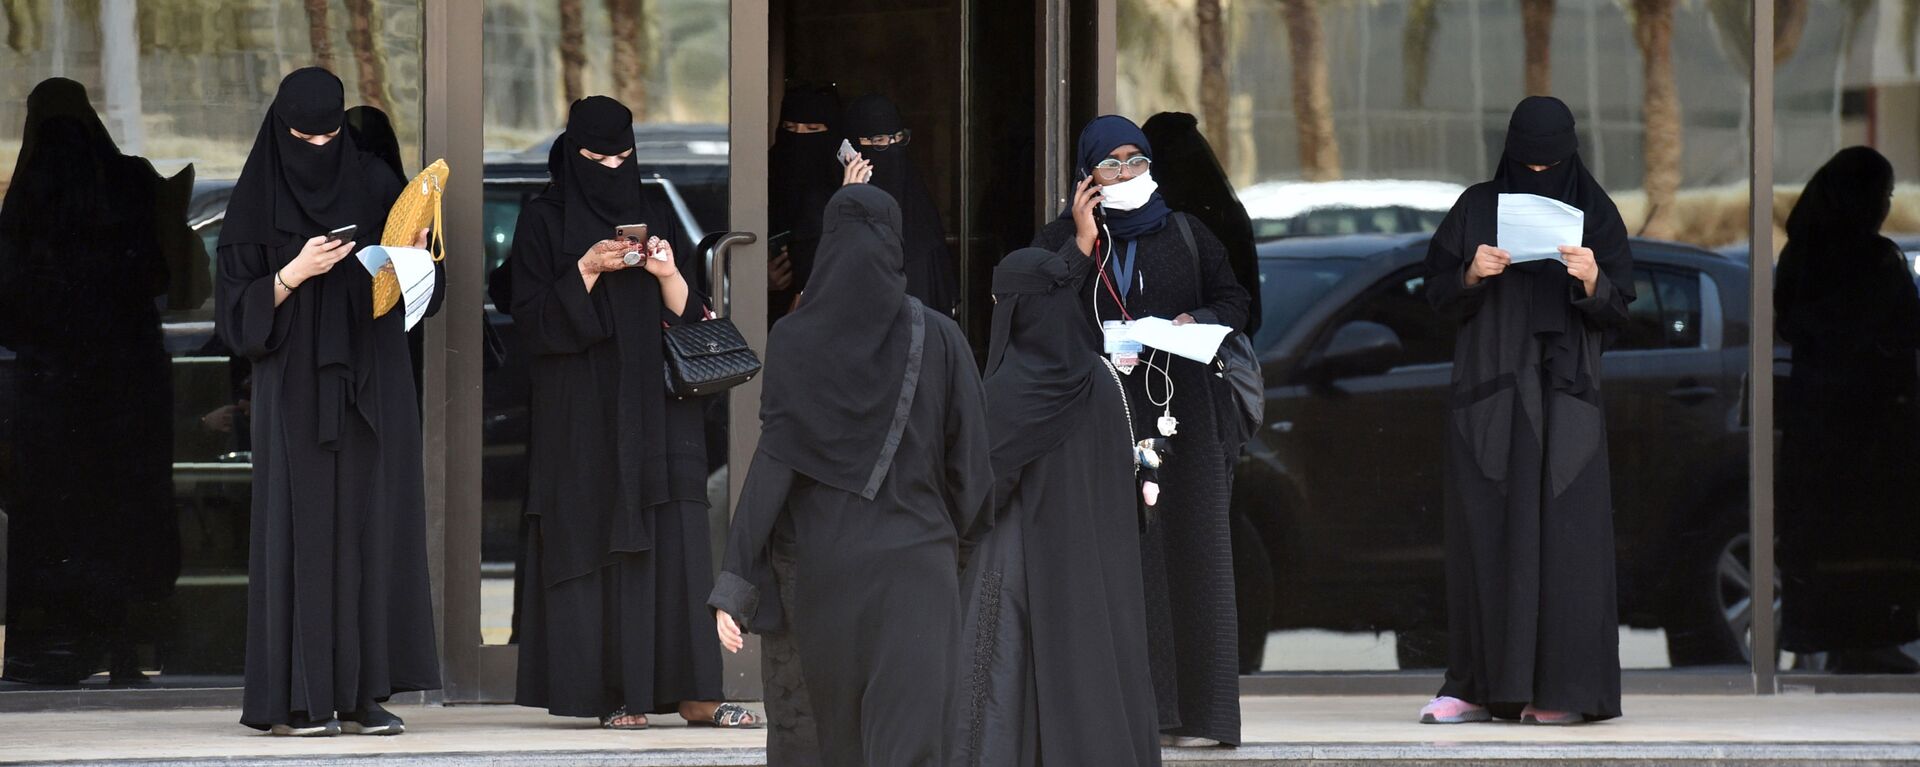 نساء سعوديات، 24 يونيو 2019 - سبوتنيك عربي, 1920, 09.02.2020